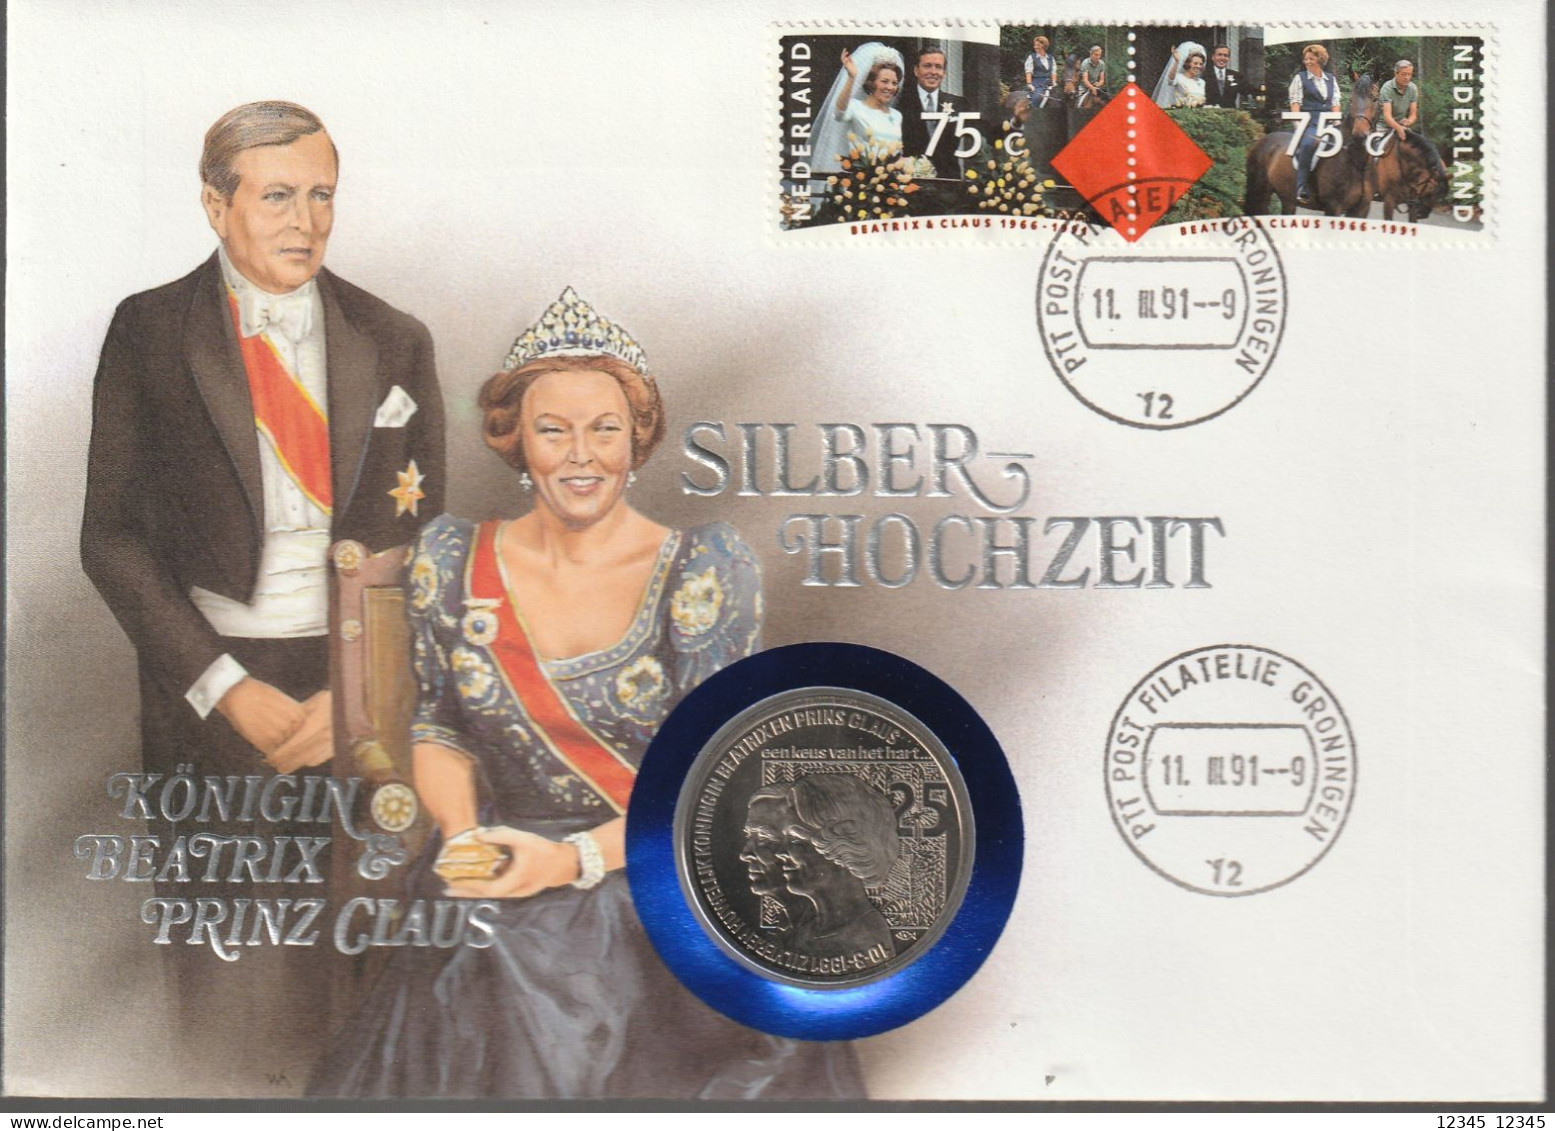 1991, Coincard, Königin Beatrix & Prinz Claus, Silberhochzeit - Coin Envelopes